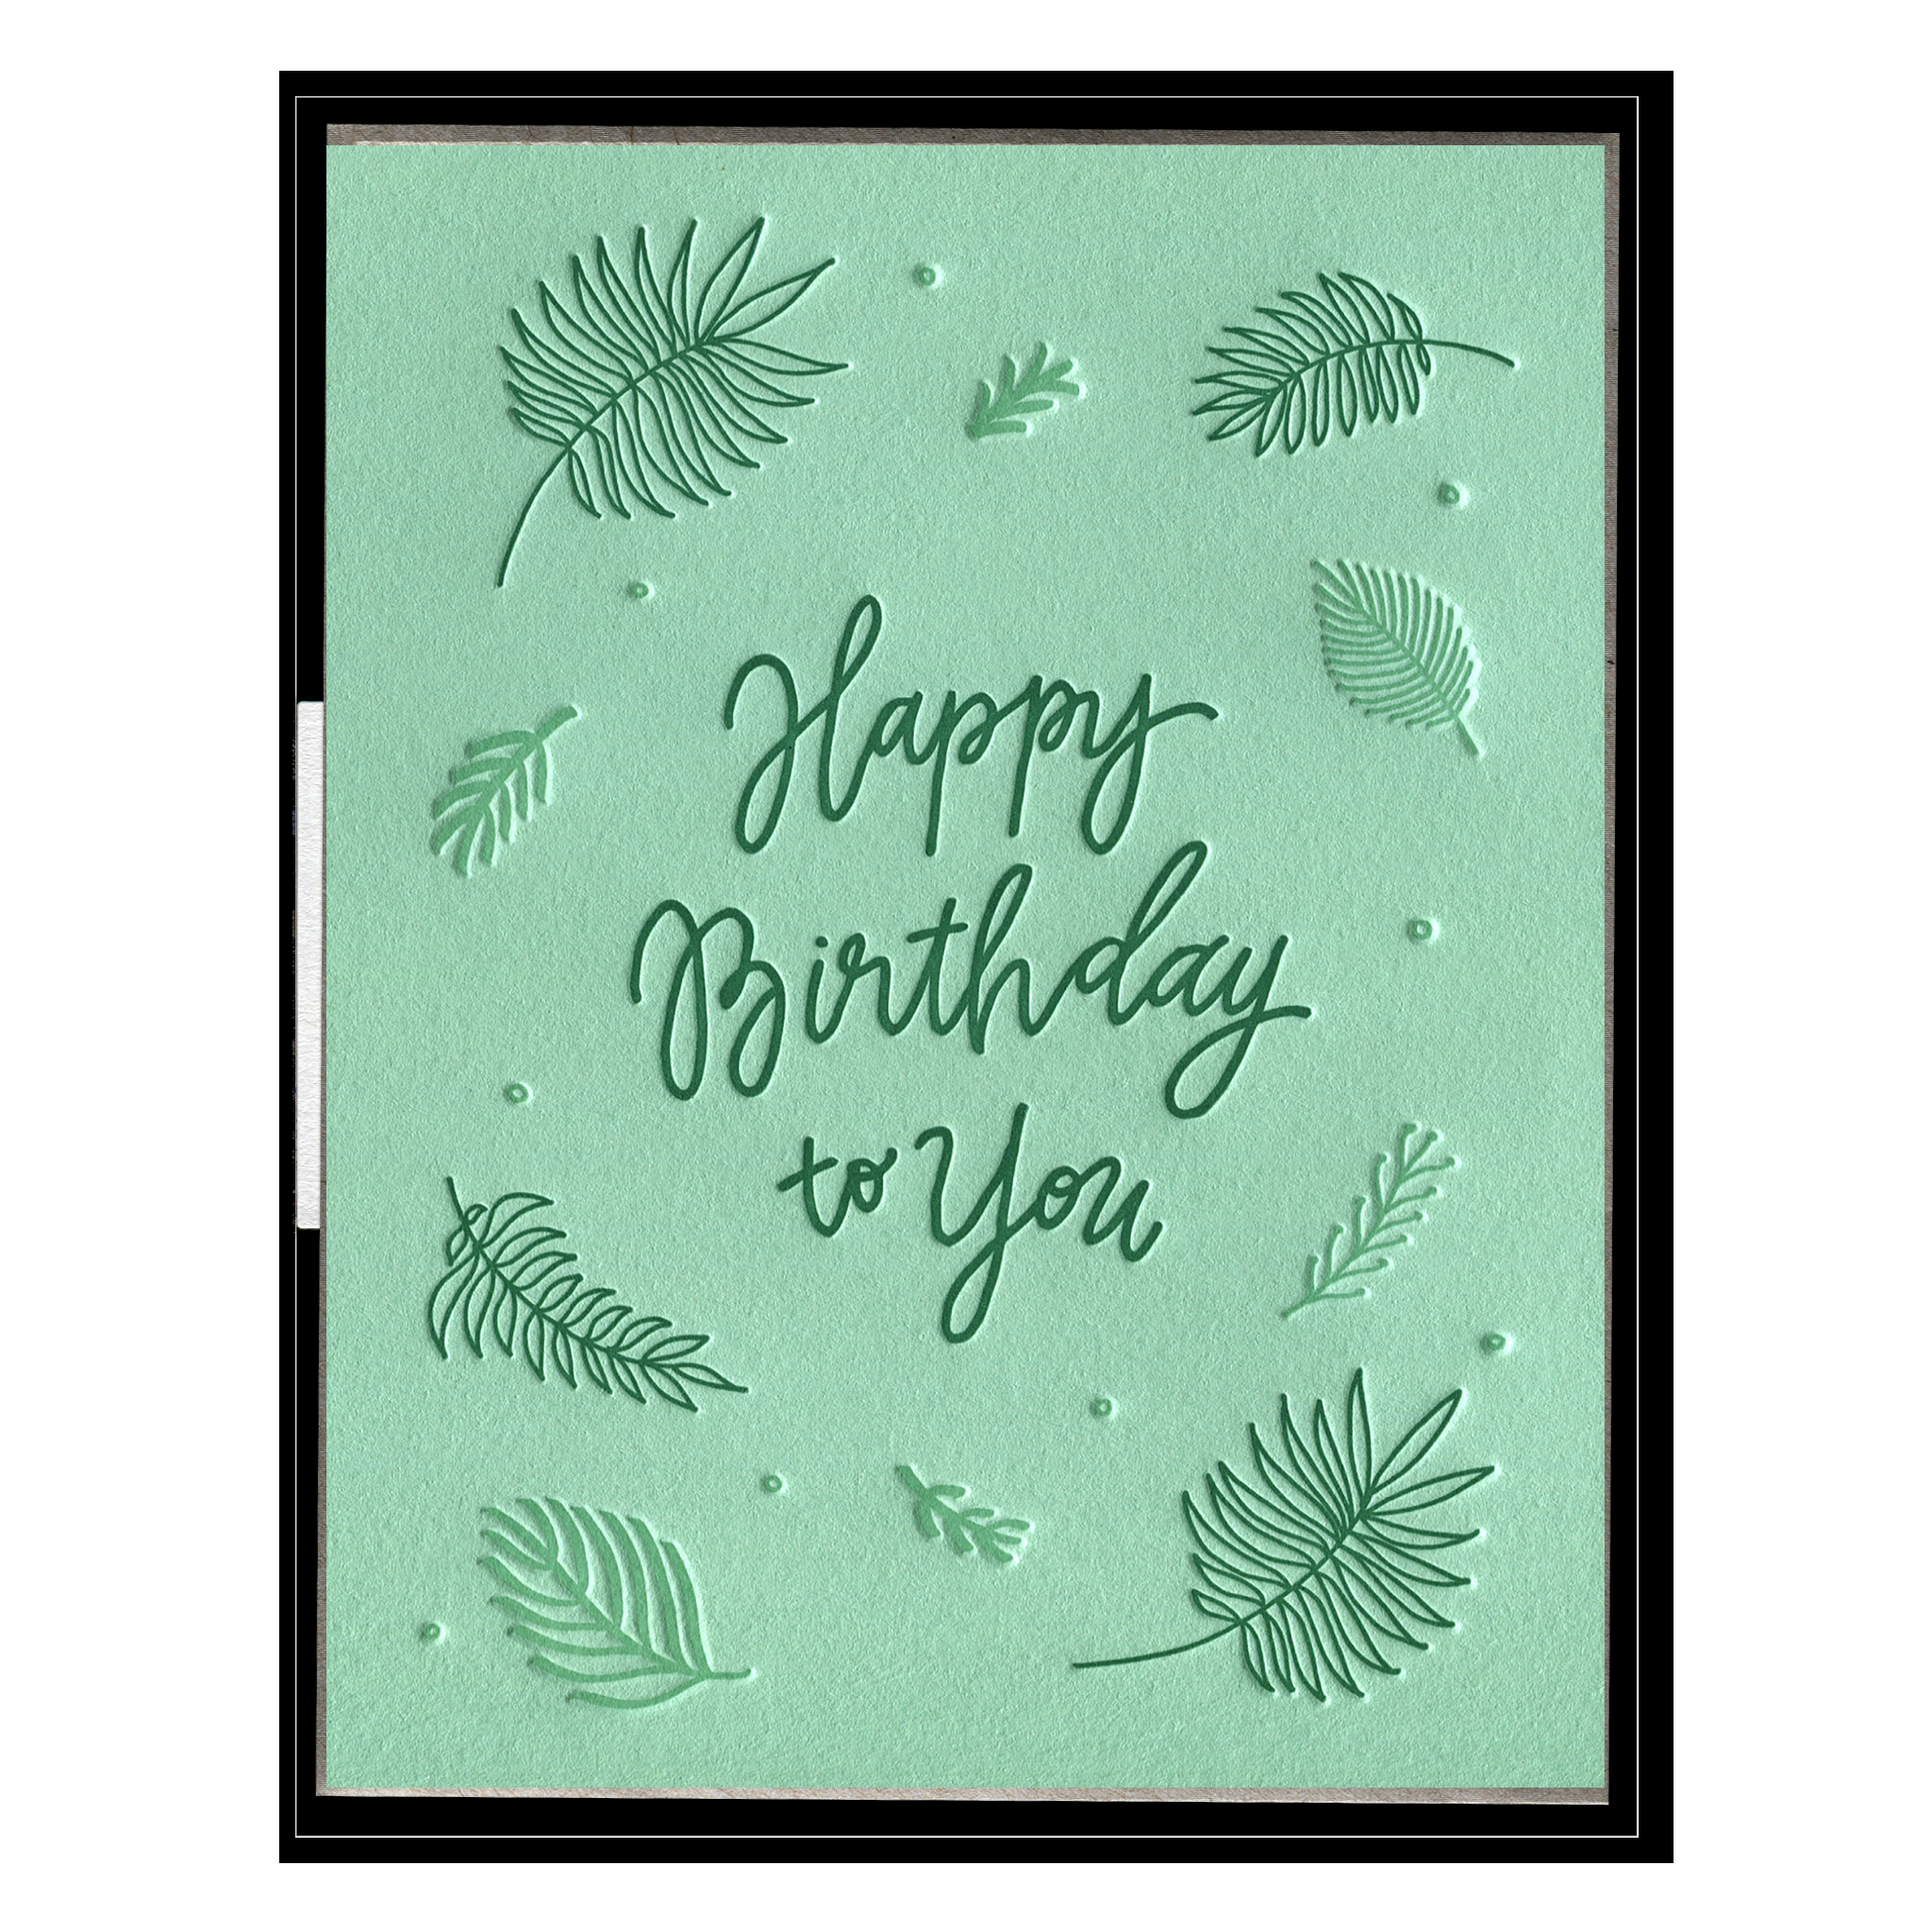 Birthday Card Ideas For Grandma Grandma Birthday Card Ideas Search Result 72 Cliparts For Grandma